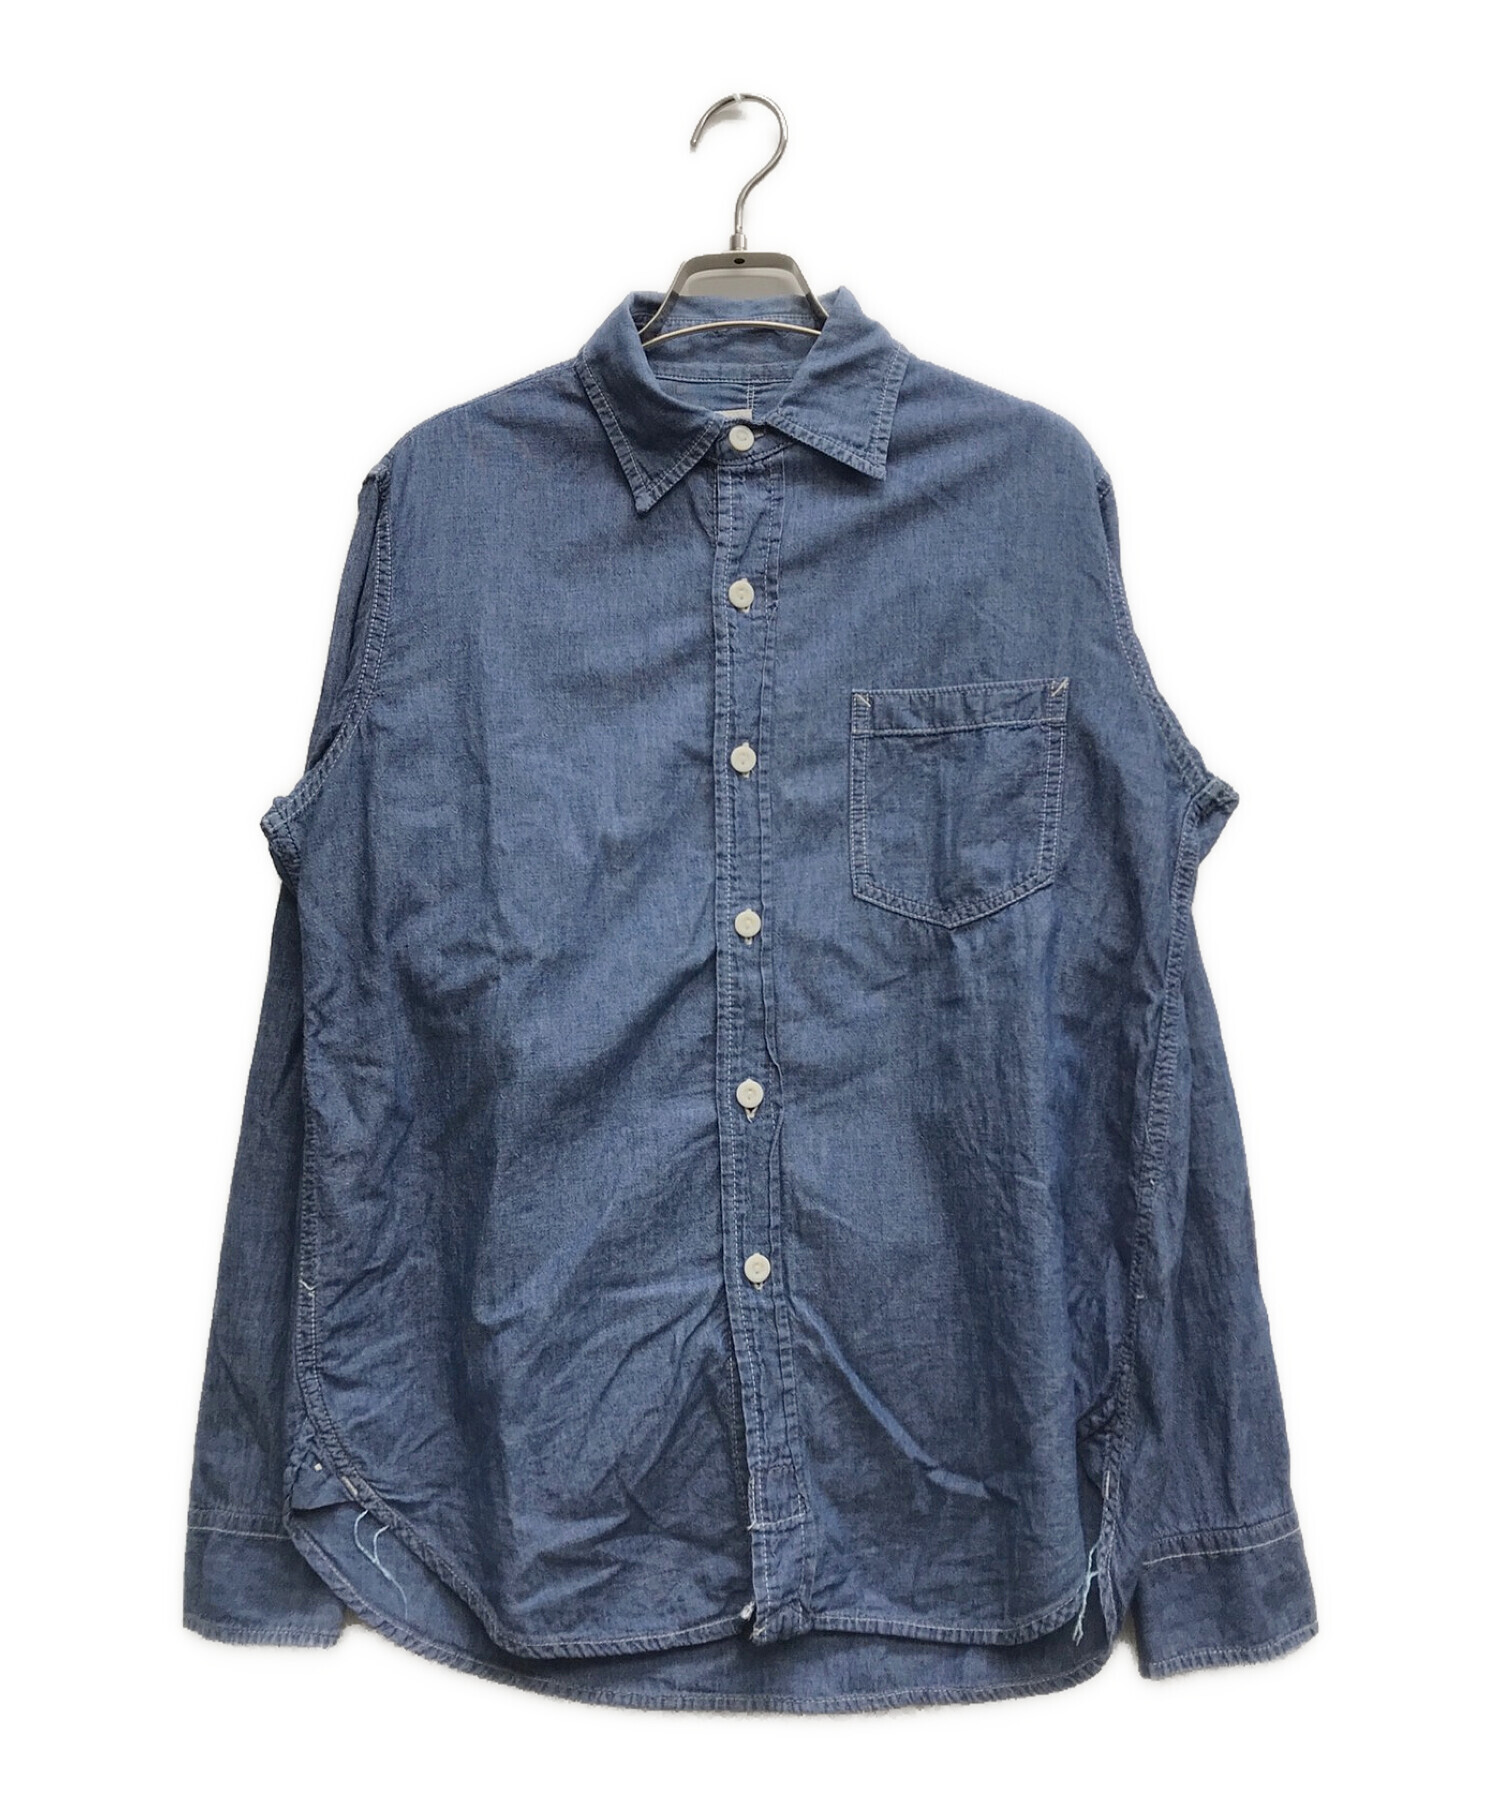 POST O'ALLS (ポストオーバーオールズ) シャンブレーシャツ ブルー サイズ:S